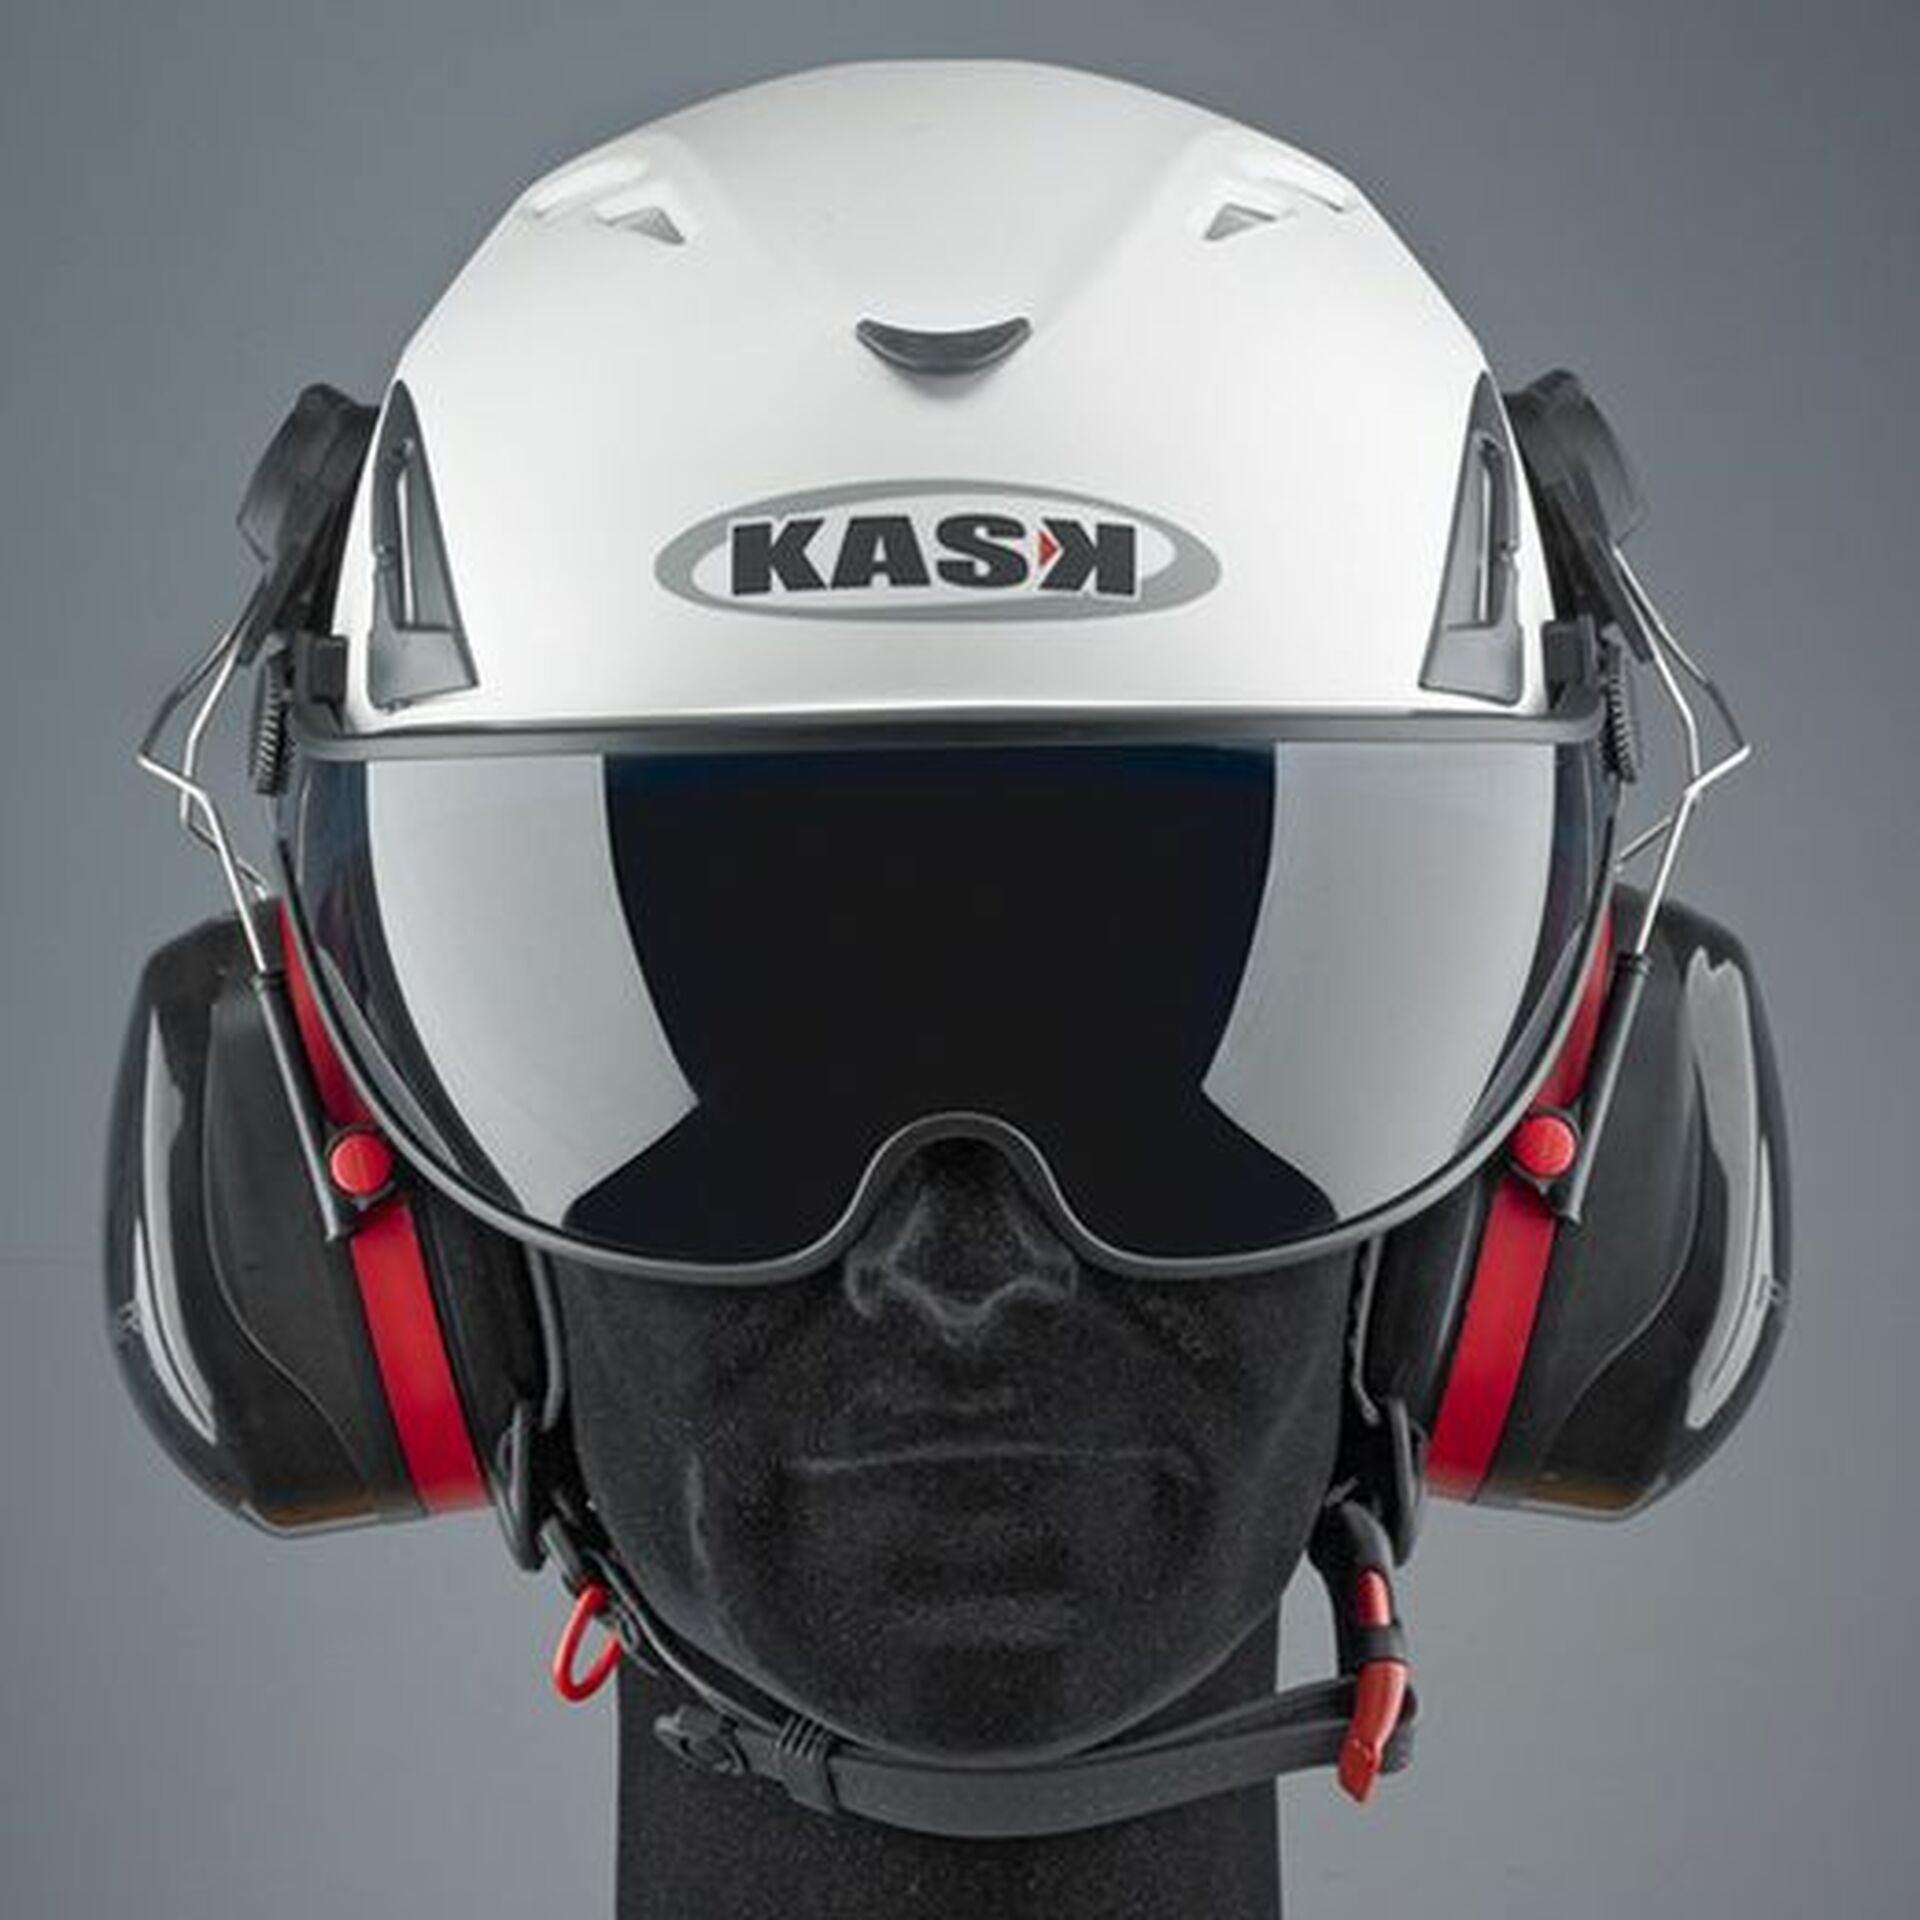 Kask Plasma Safety Helmets